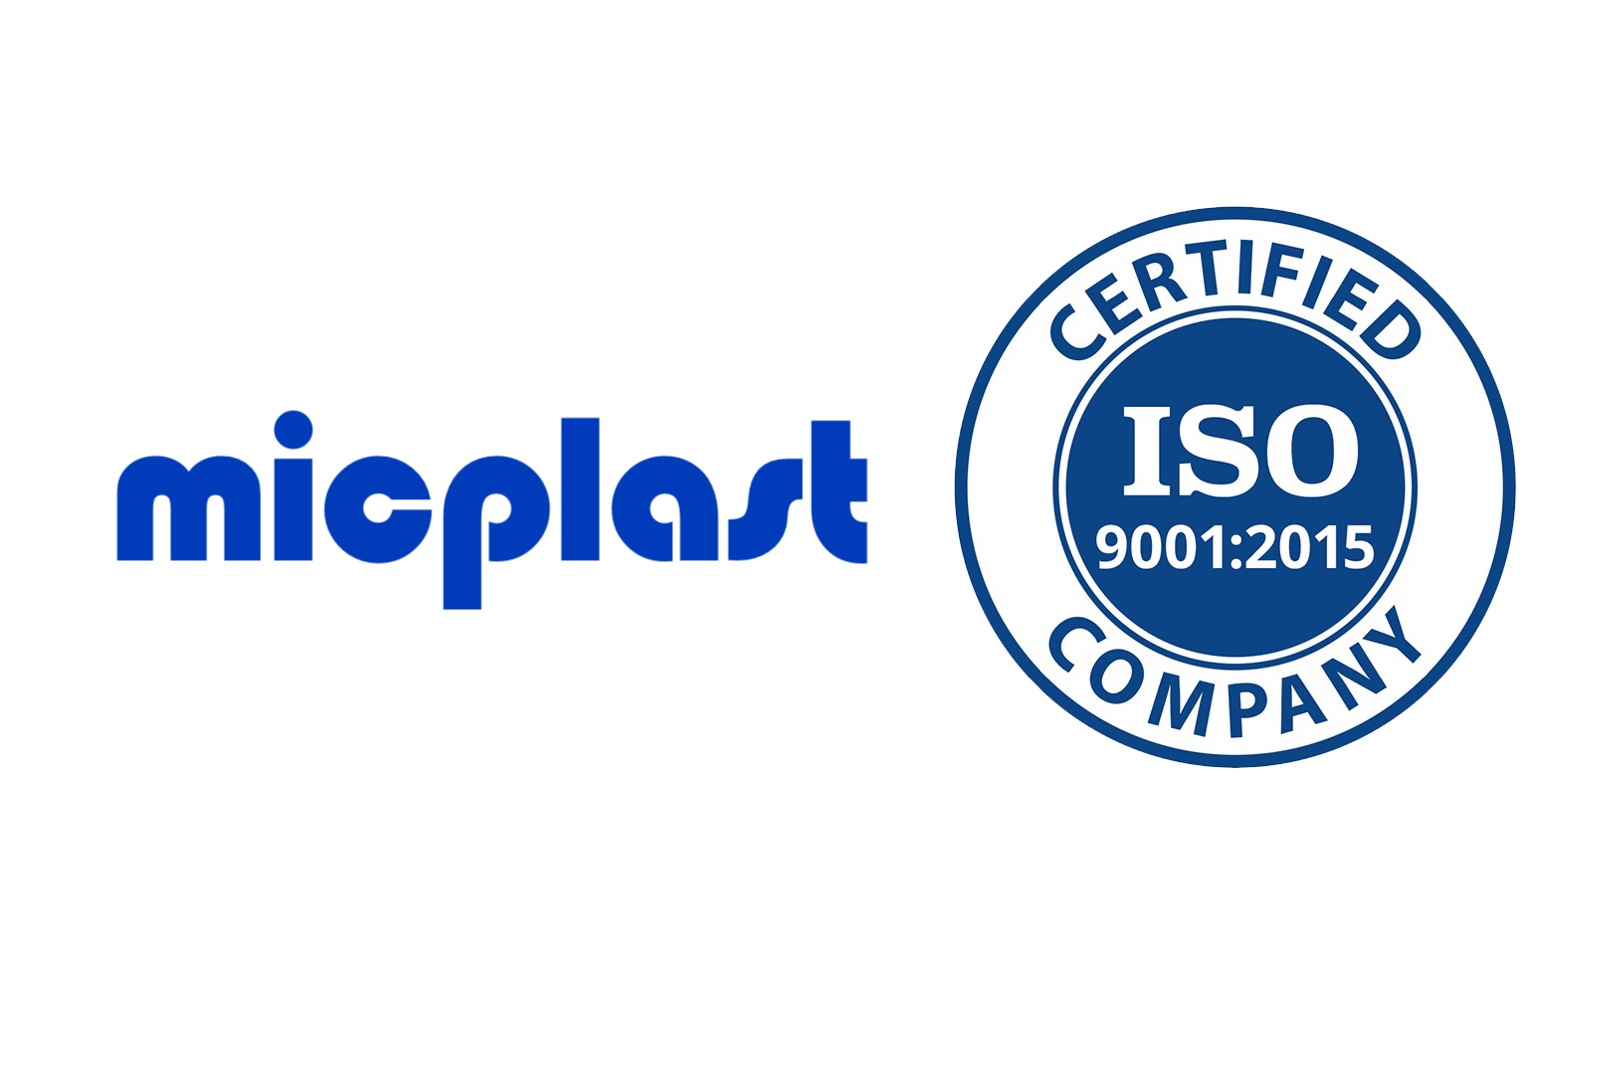 Micplast is certified ISO 9001:2015